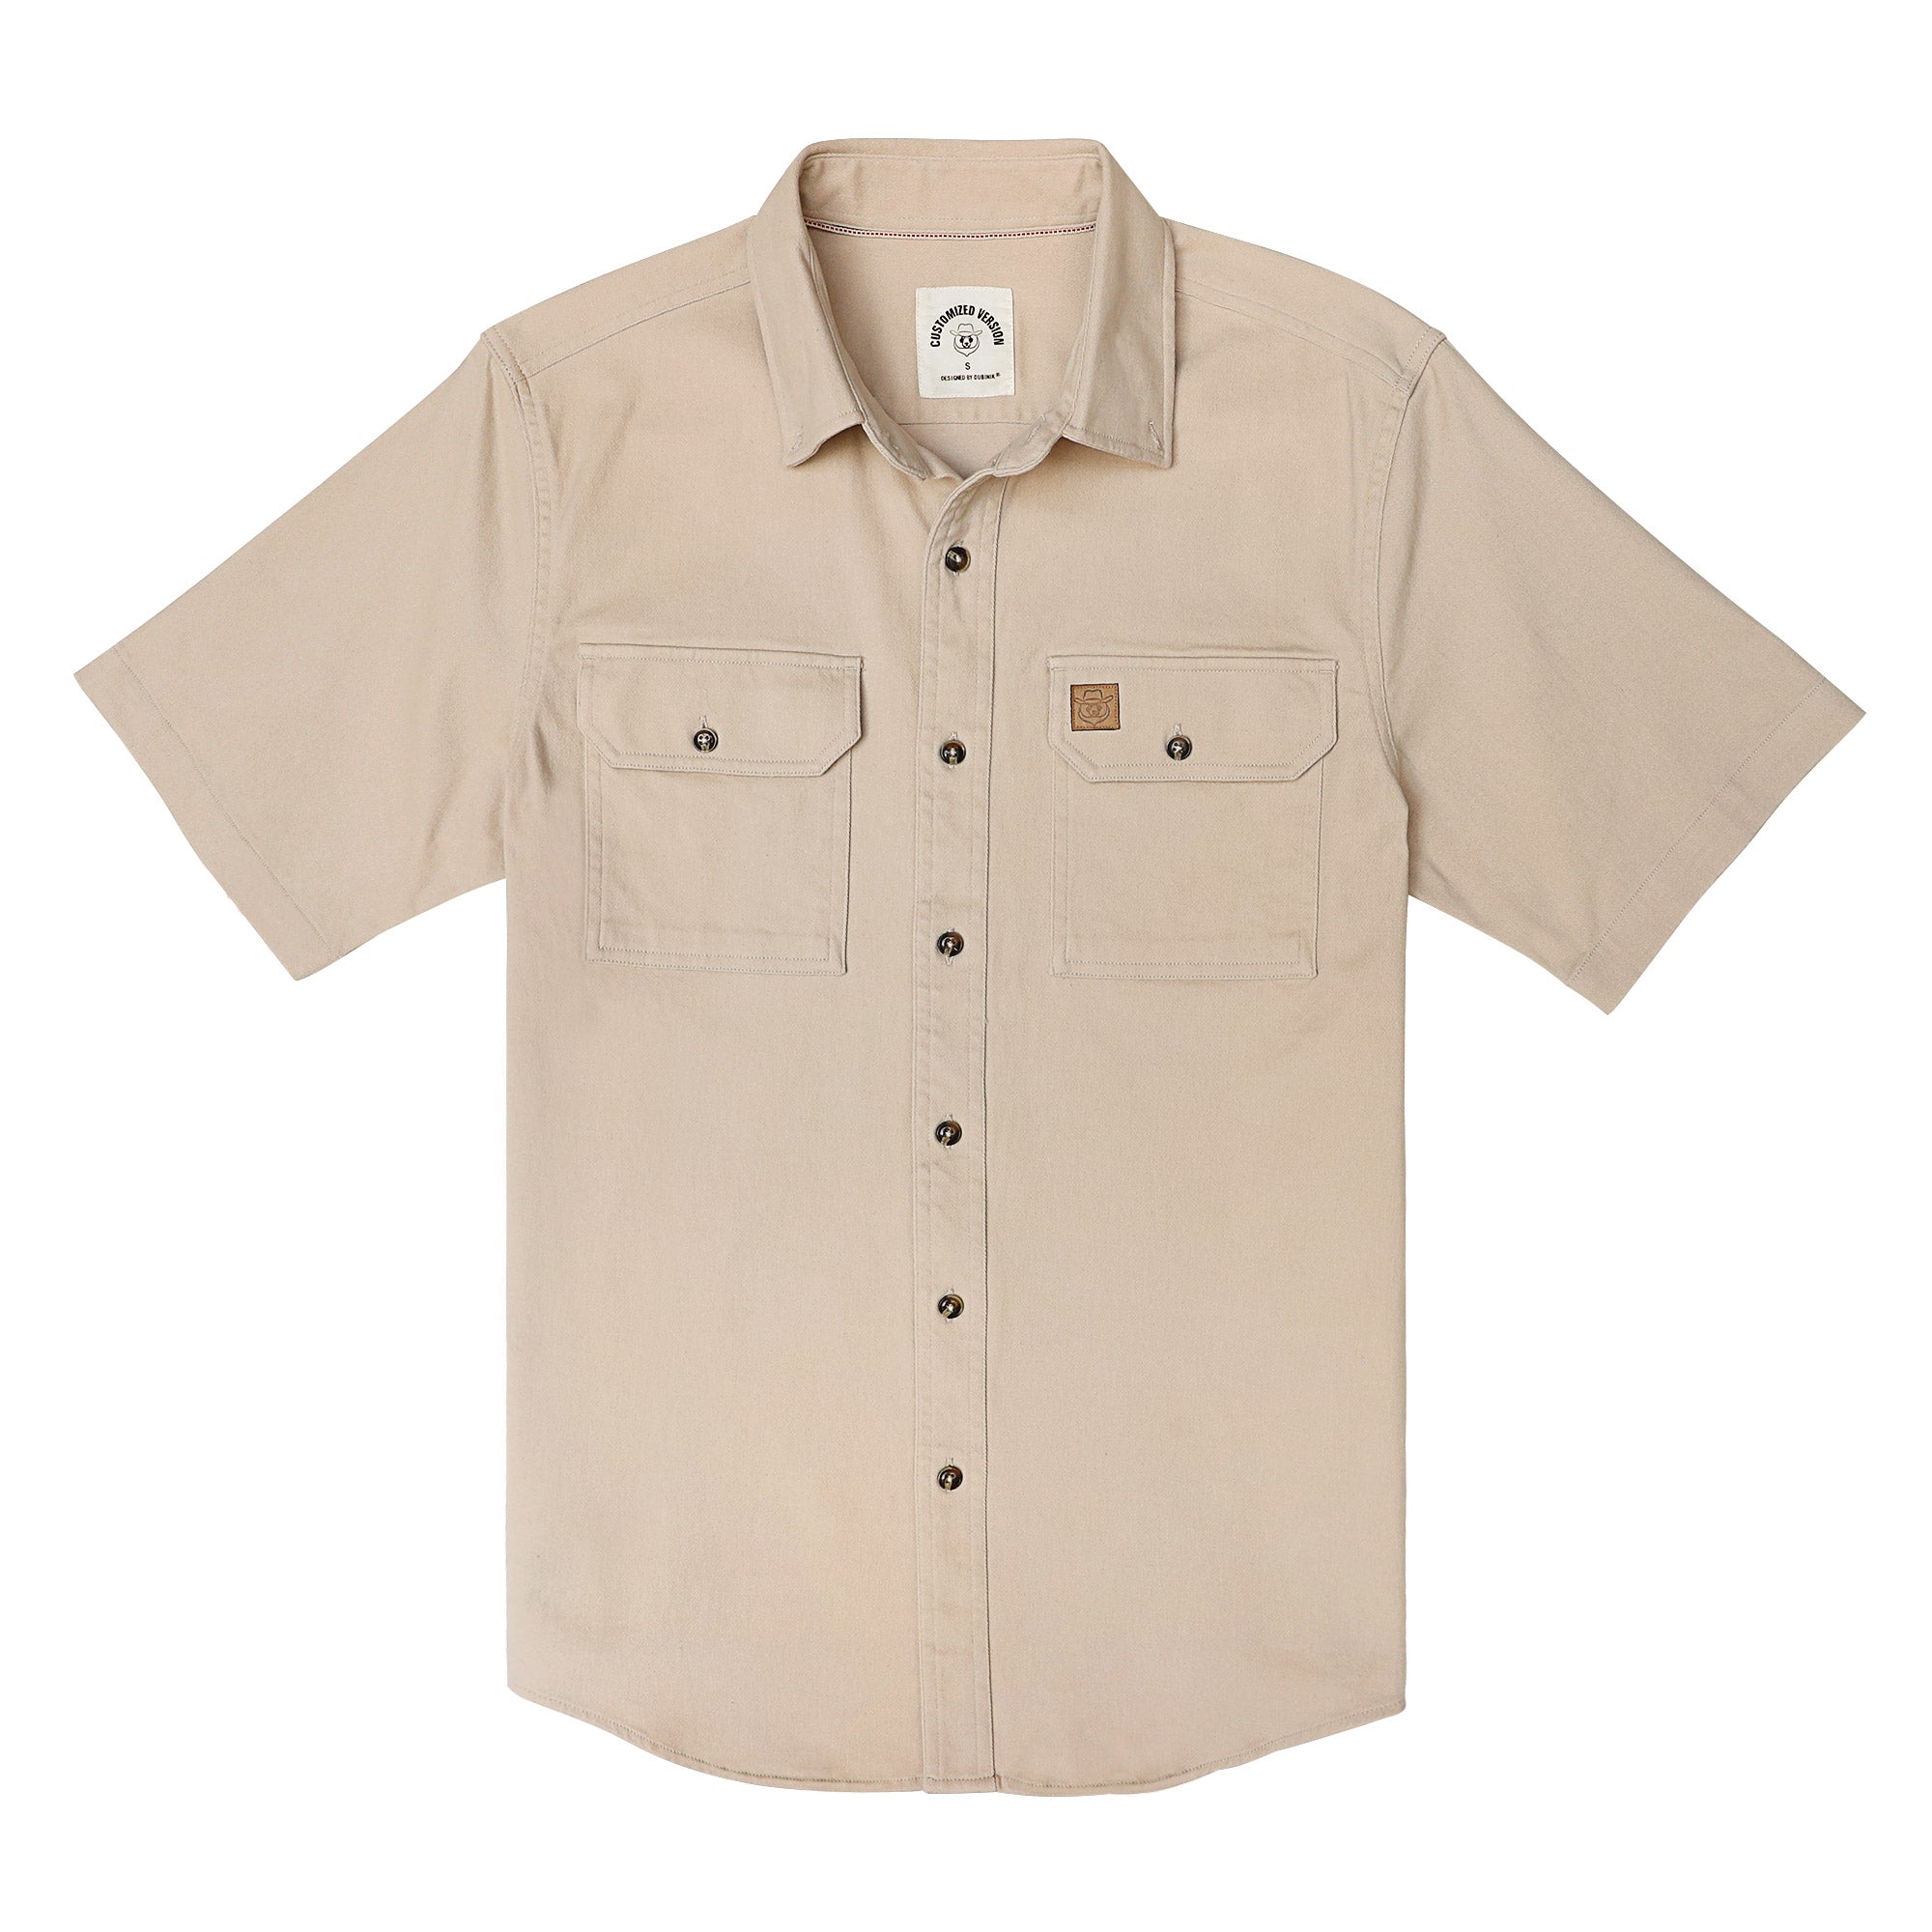 Men's outdoor casual short sleeve shirt #1508